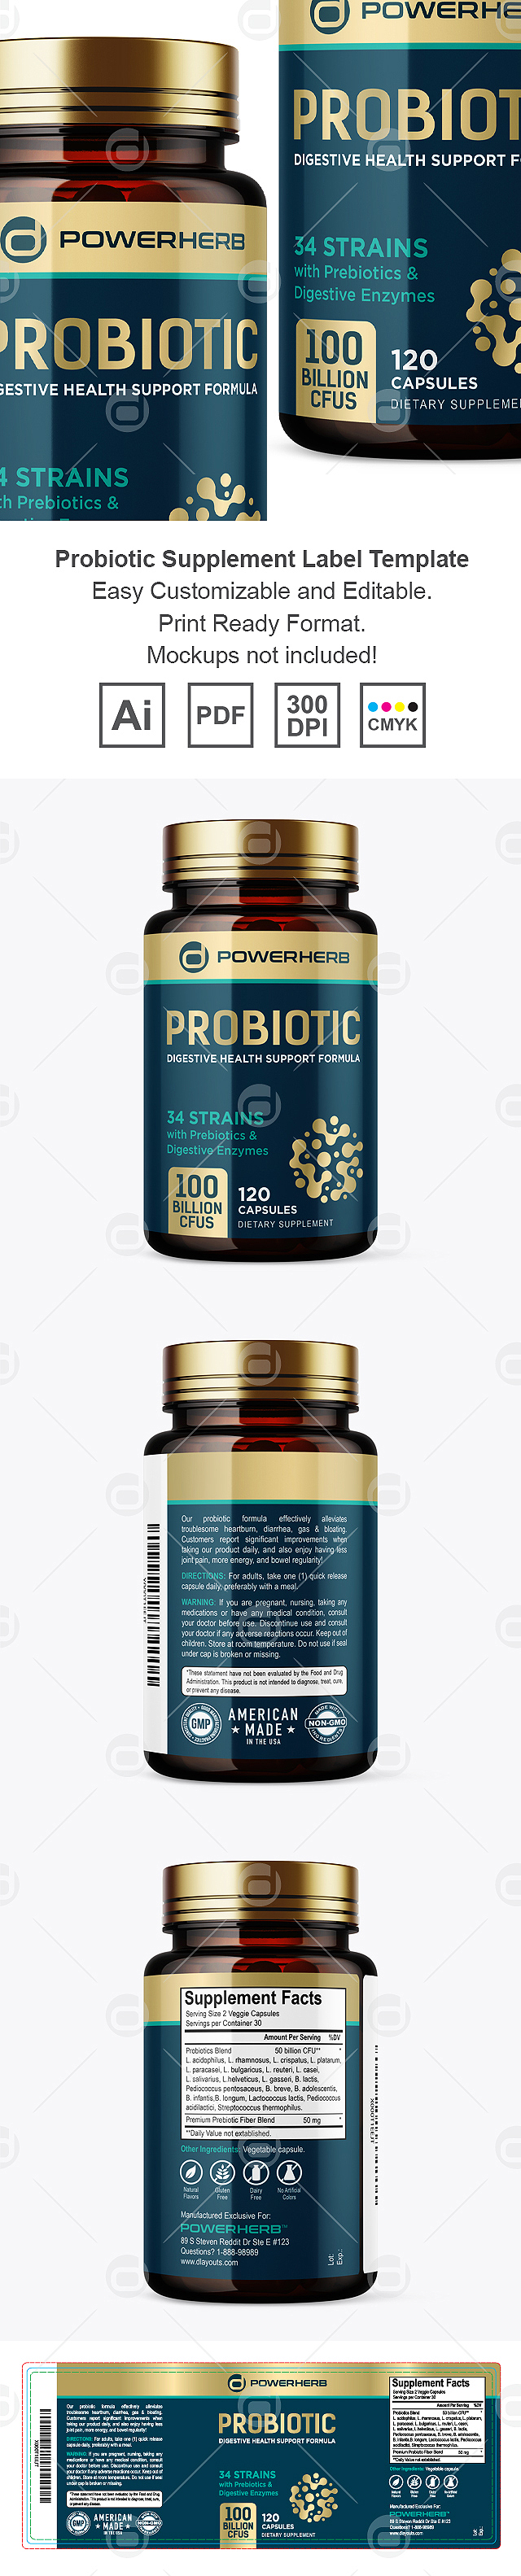 Probiotic Supplement Label Template